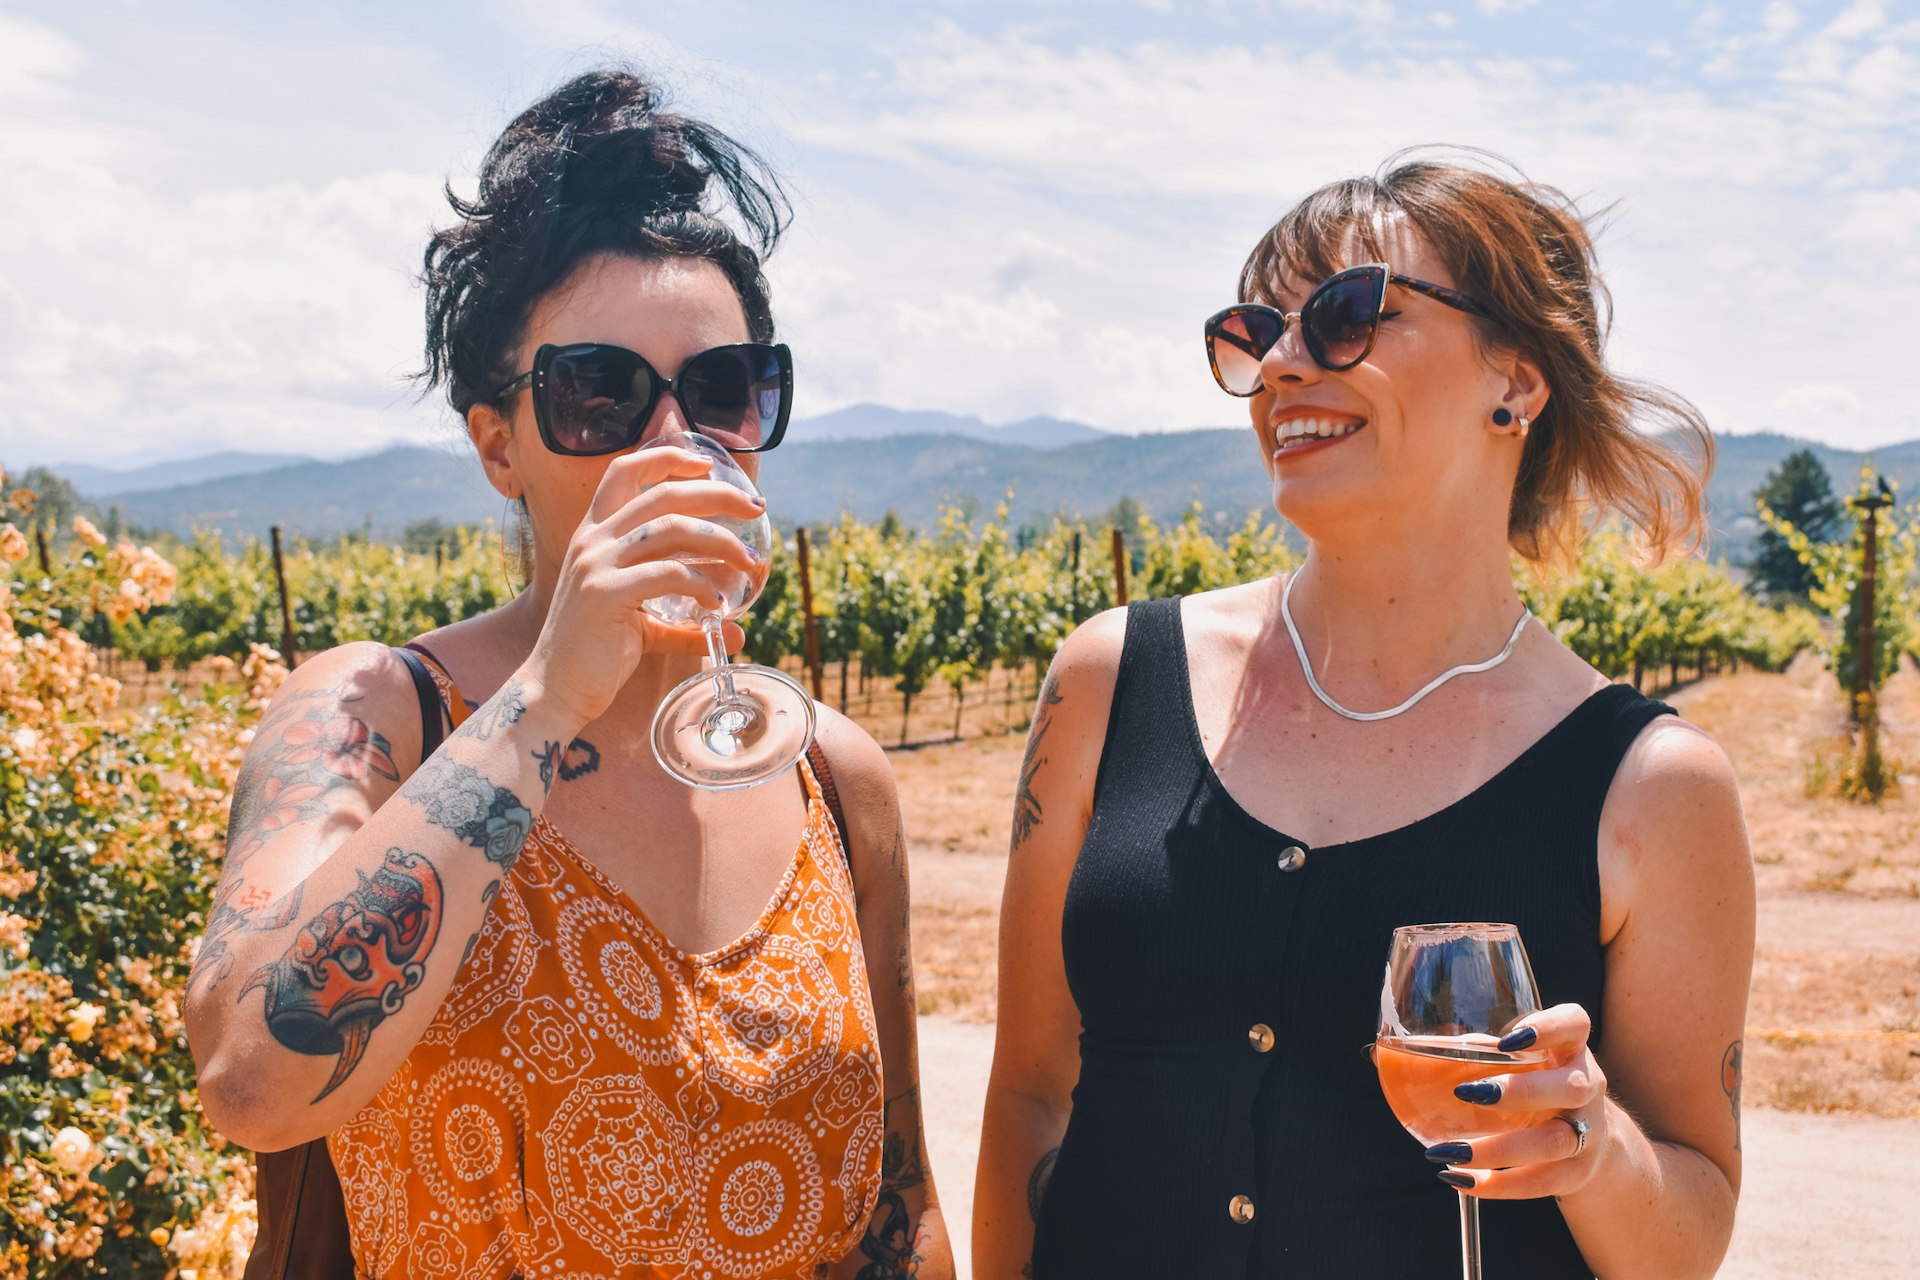 Two women drinking wine in the sunshine in a vineyard